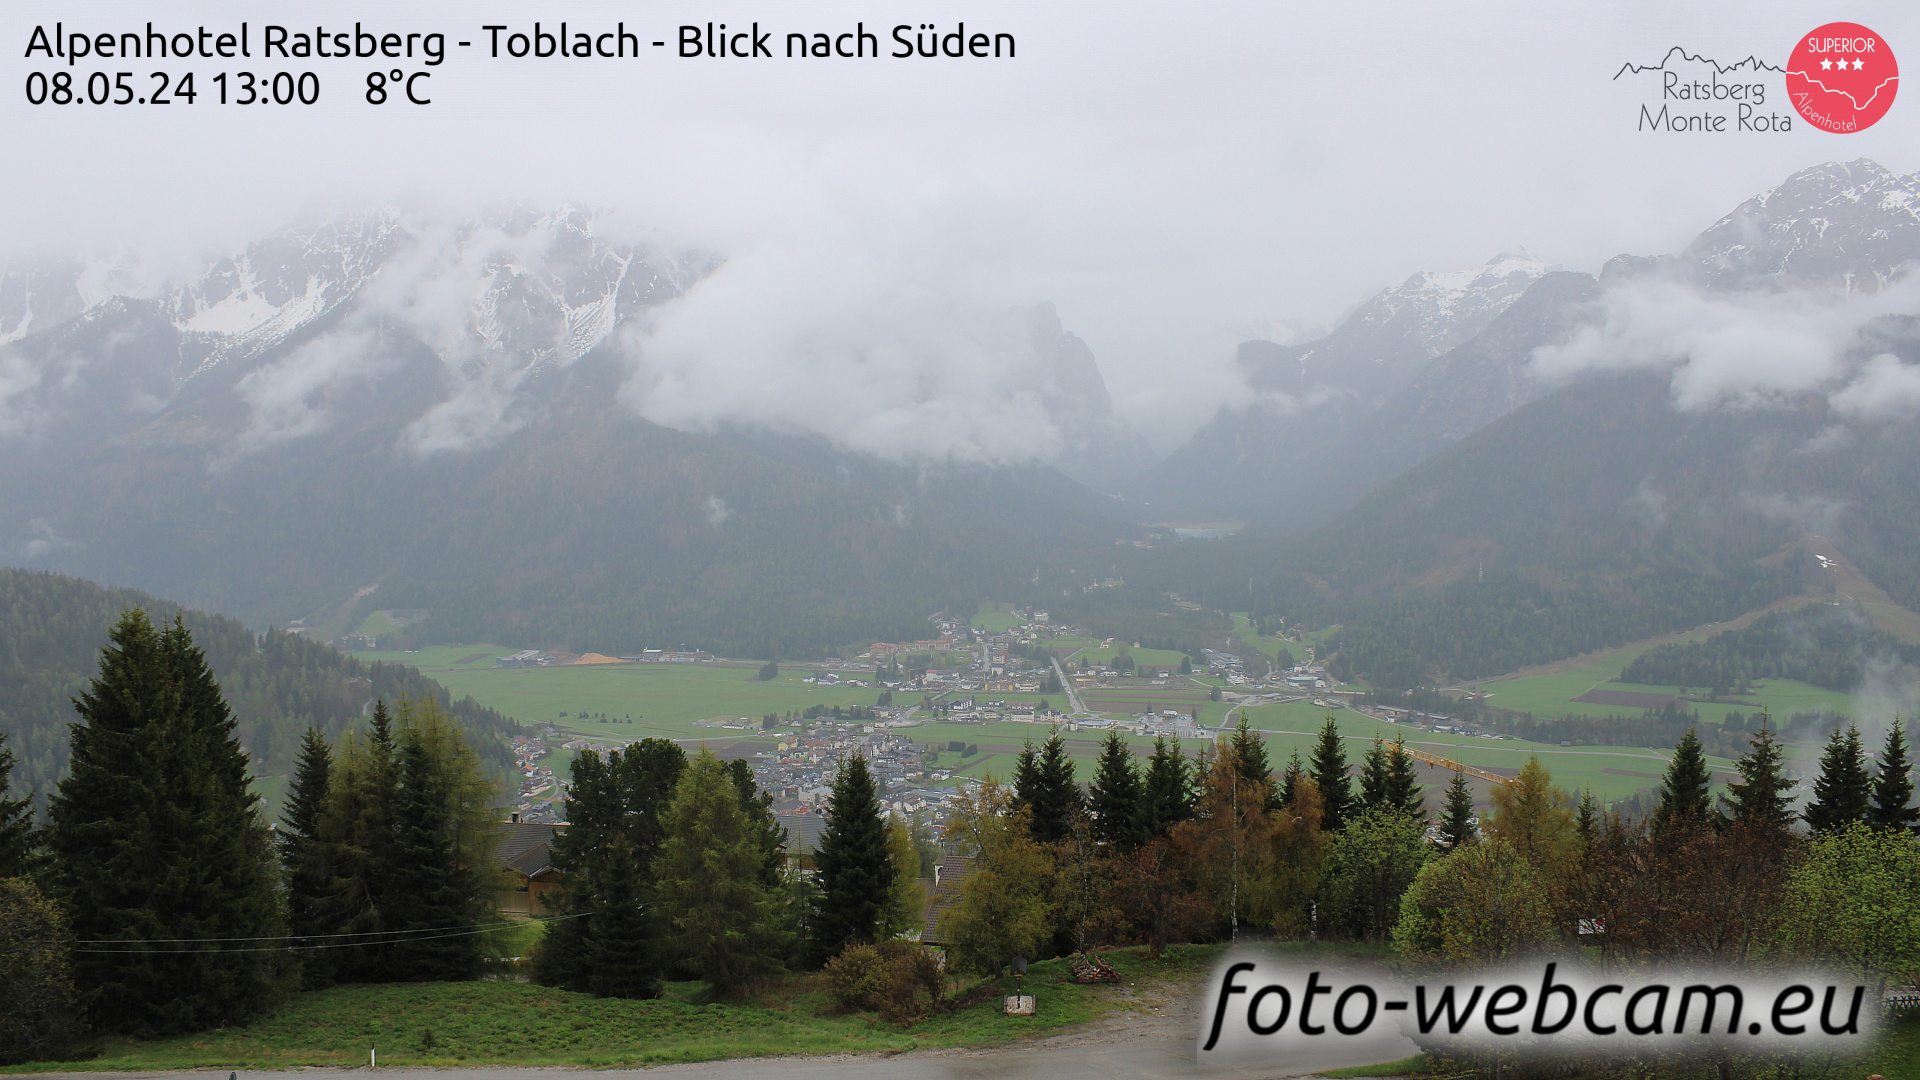 Toblach (Dolomiten) Fr. 13:04